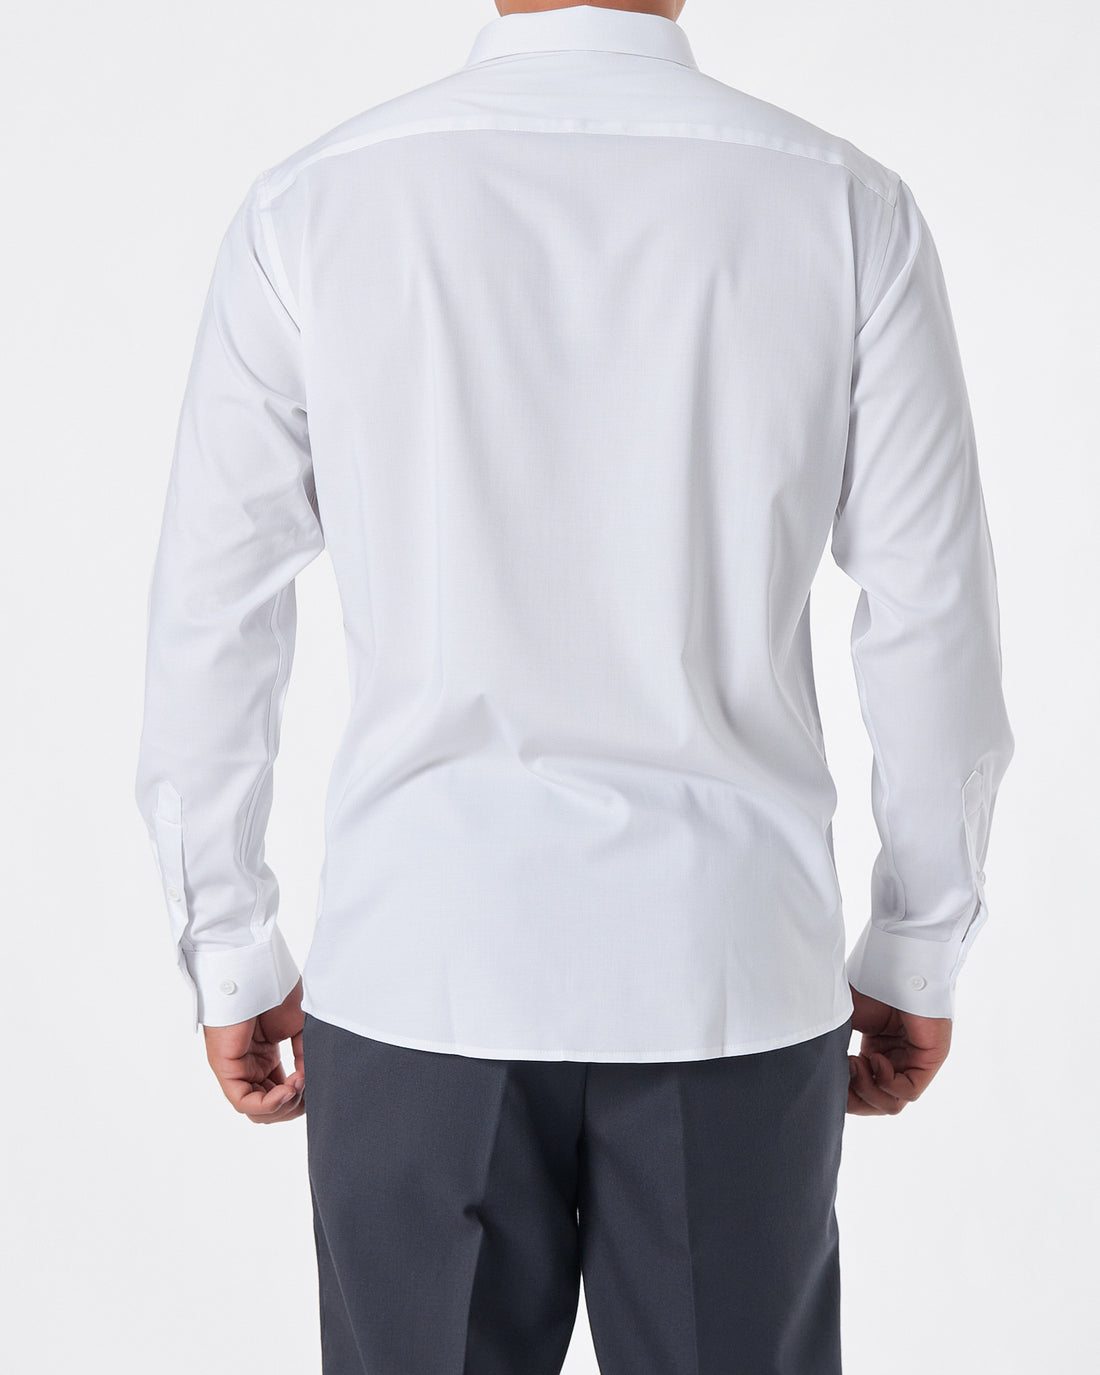 NK Slim Fit Men White Shirts Long Sleeve 25.90